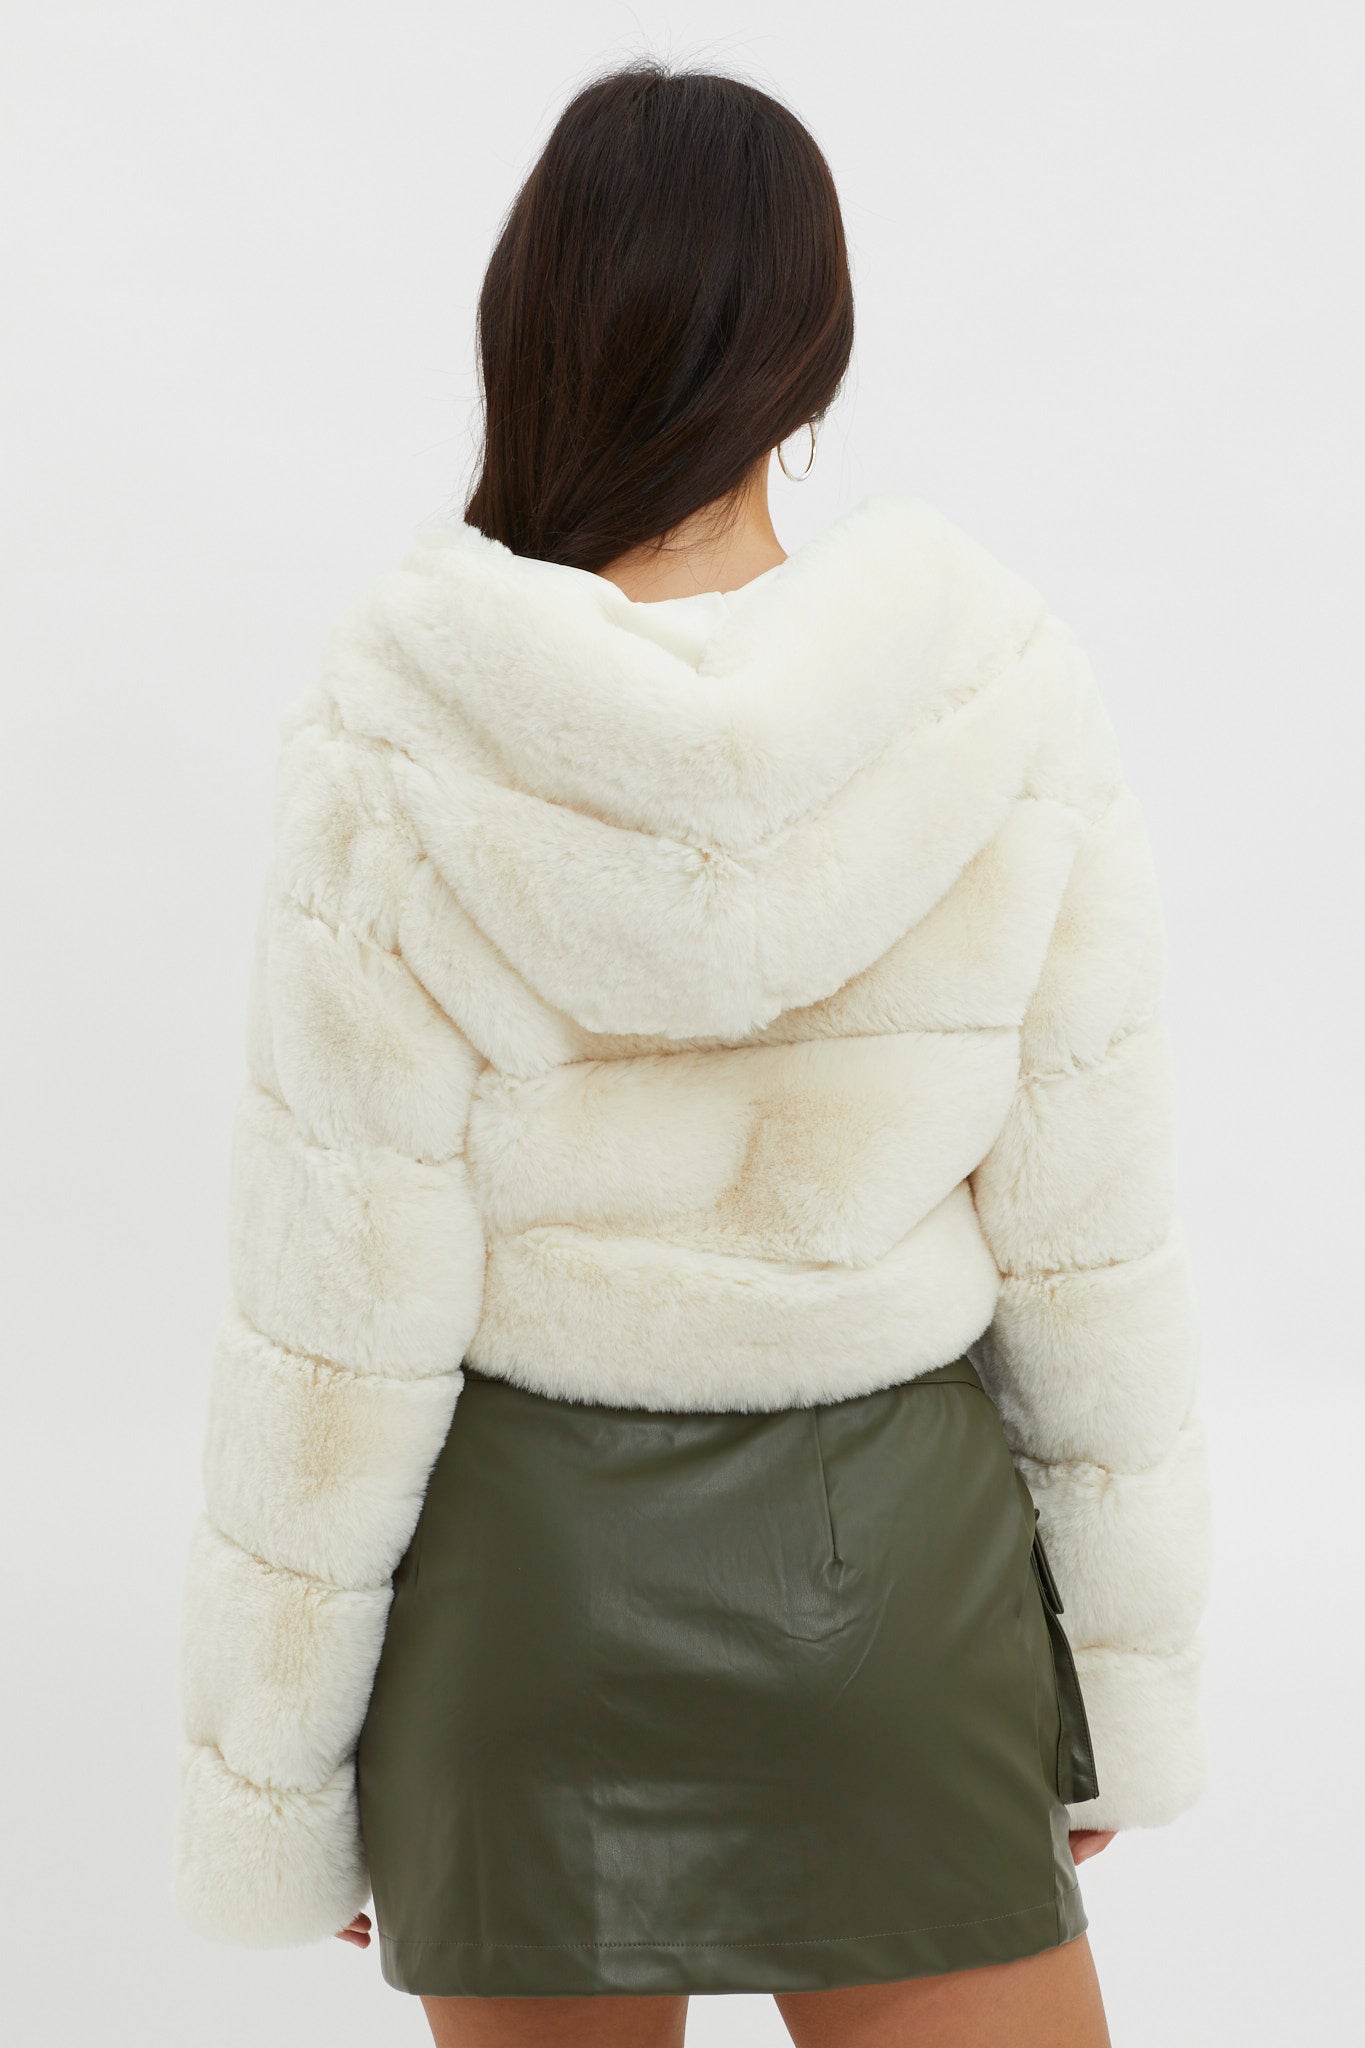 Abercrombie & Fitch Ivory Cream Faux Fur Women's Hooded Jacket Parka -  Medium | eBay